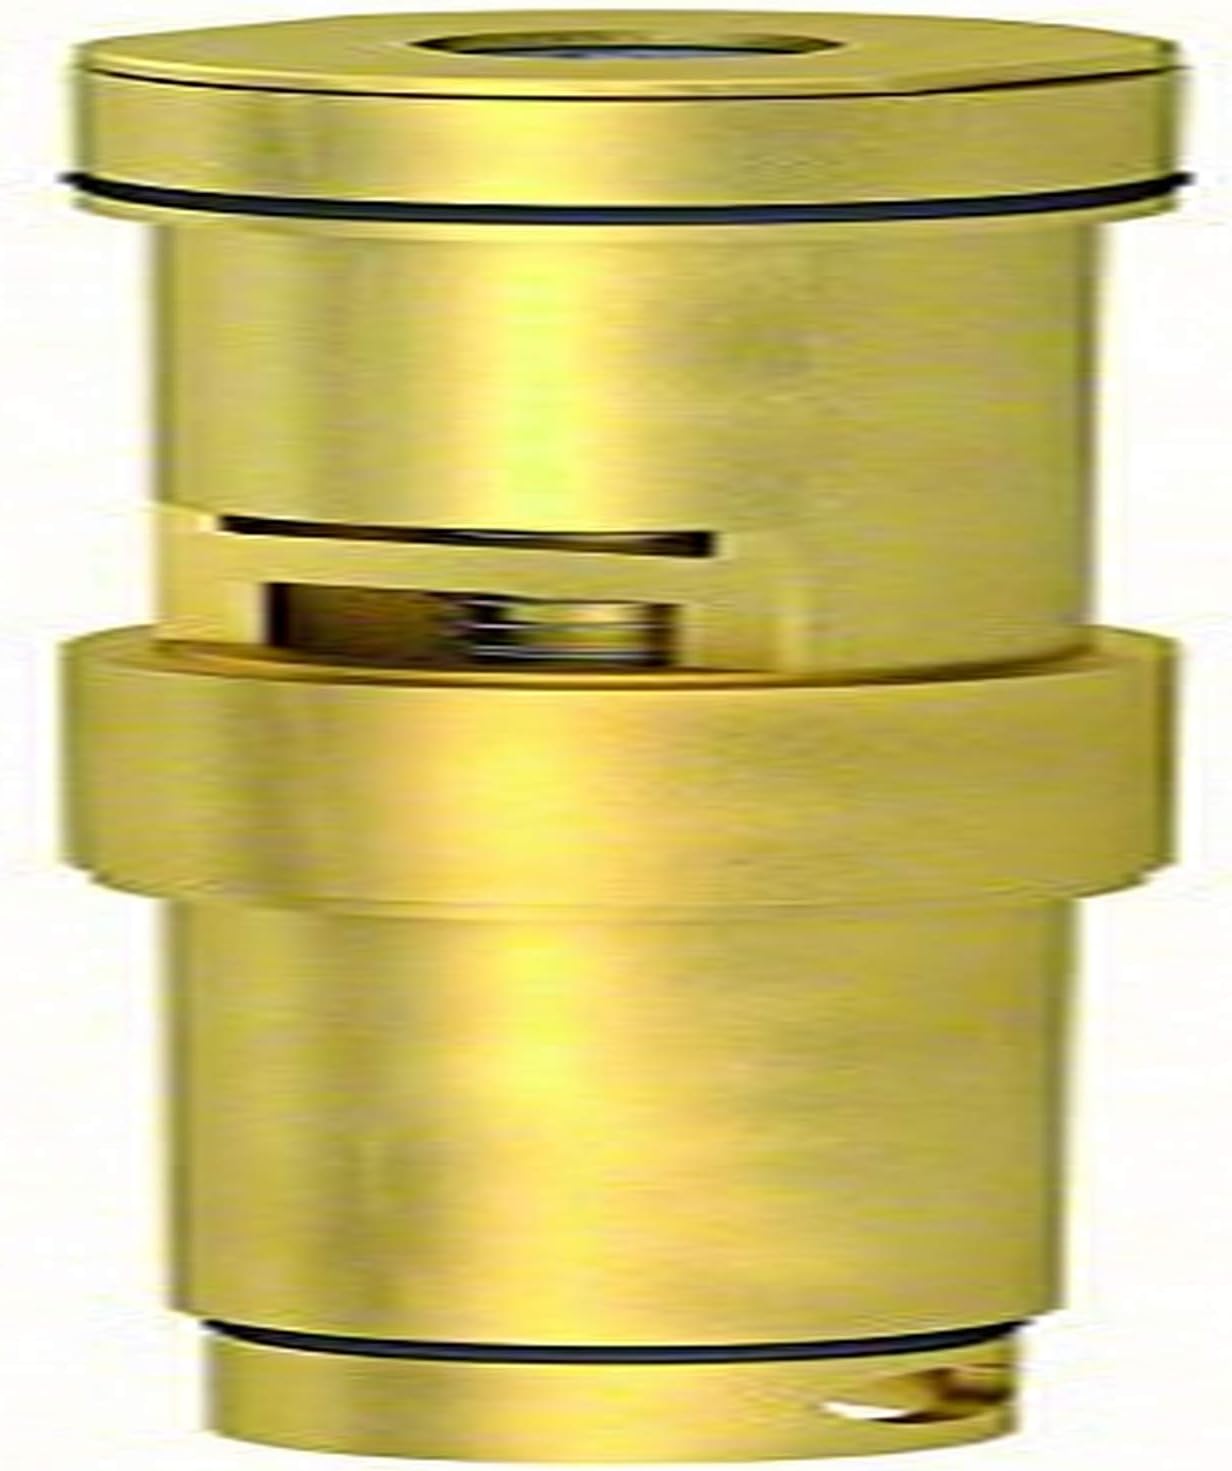 DANZE DA501341 Diverter Assembly for Roman Tub, Brushed Nickel